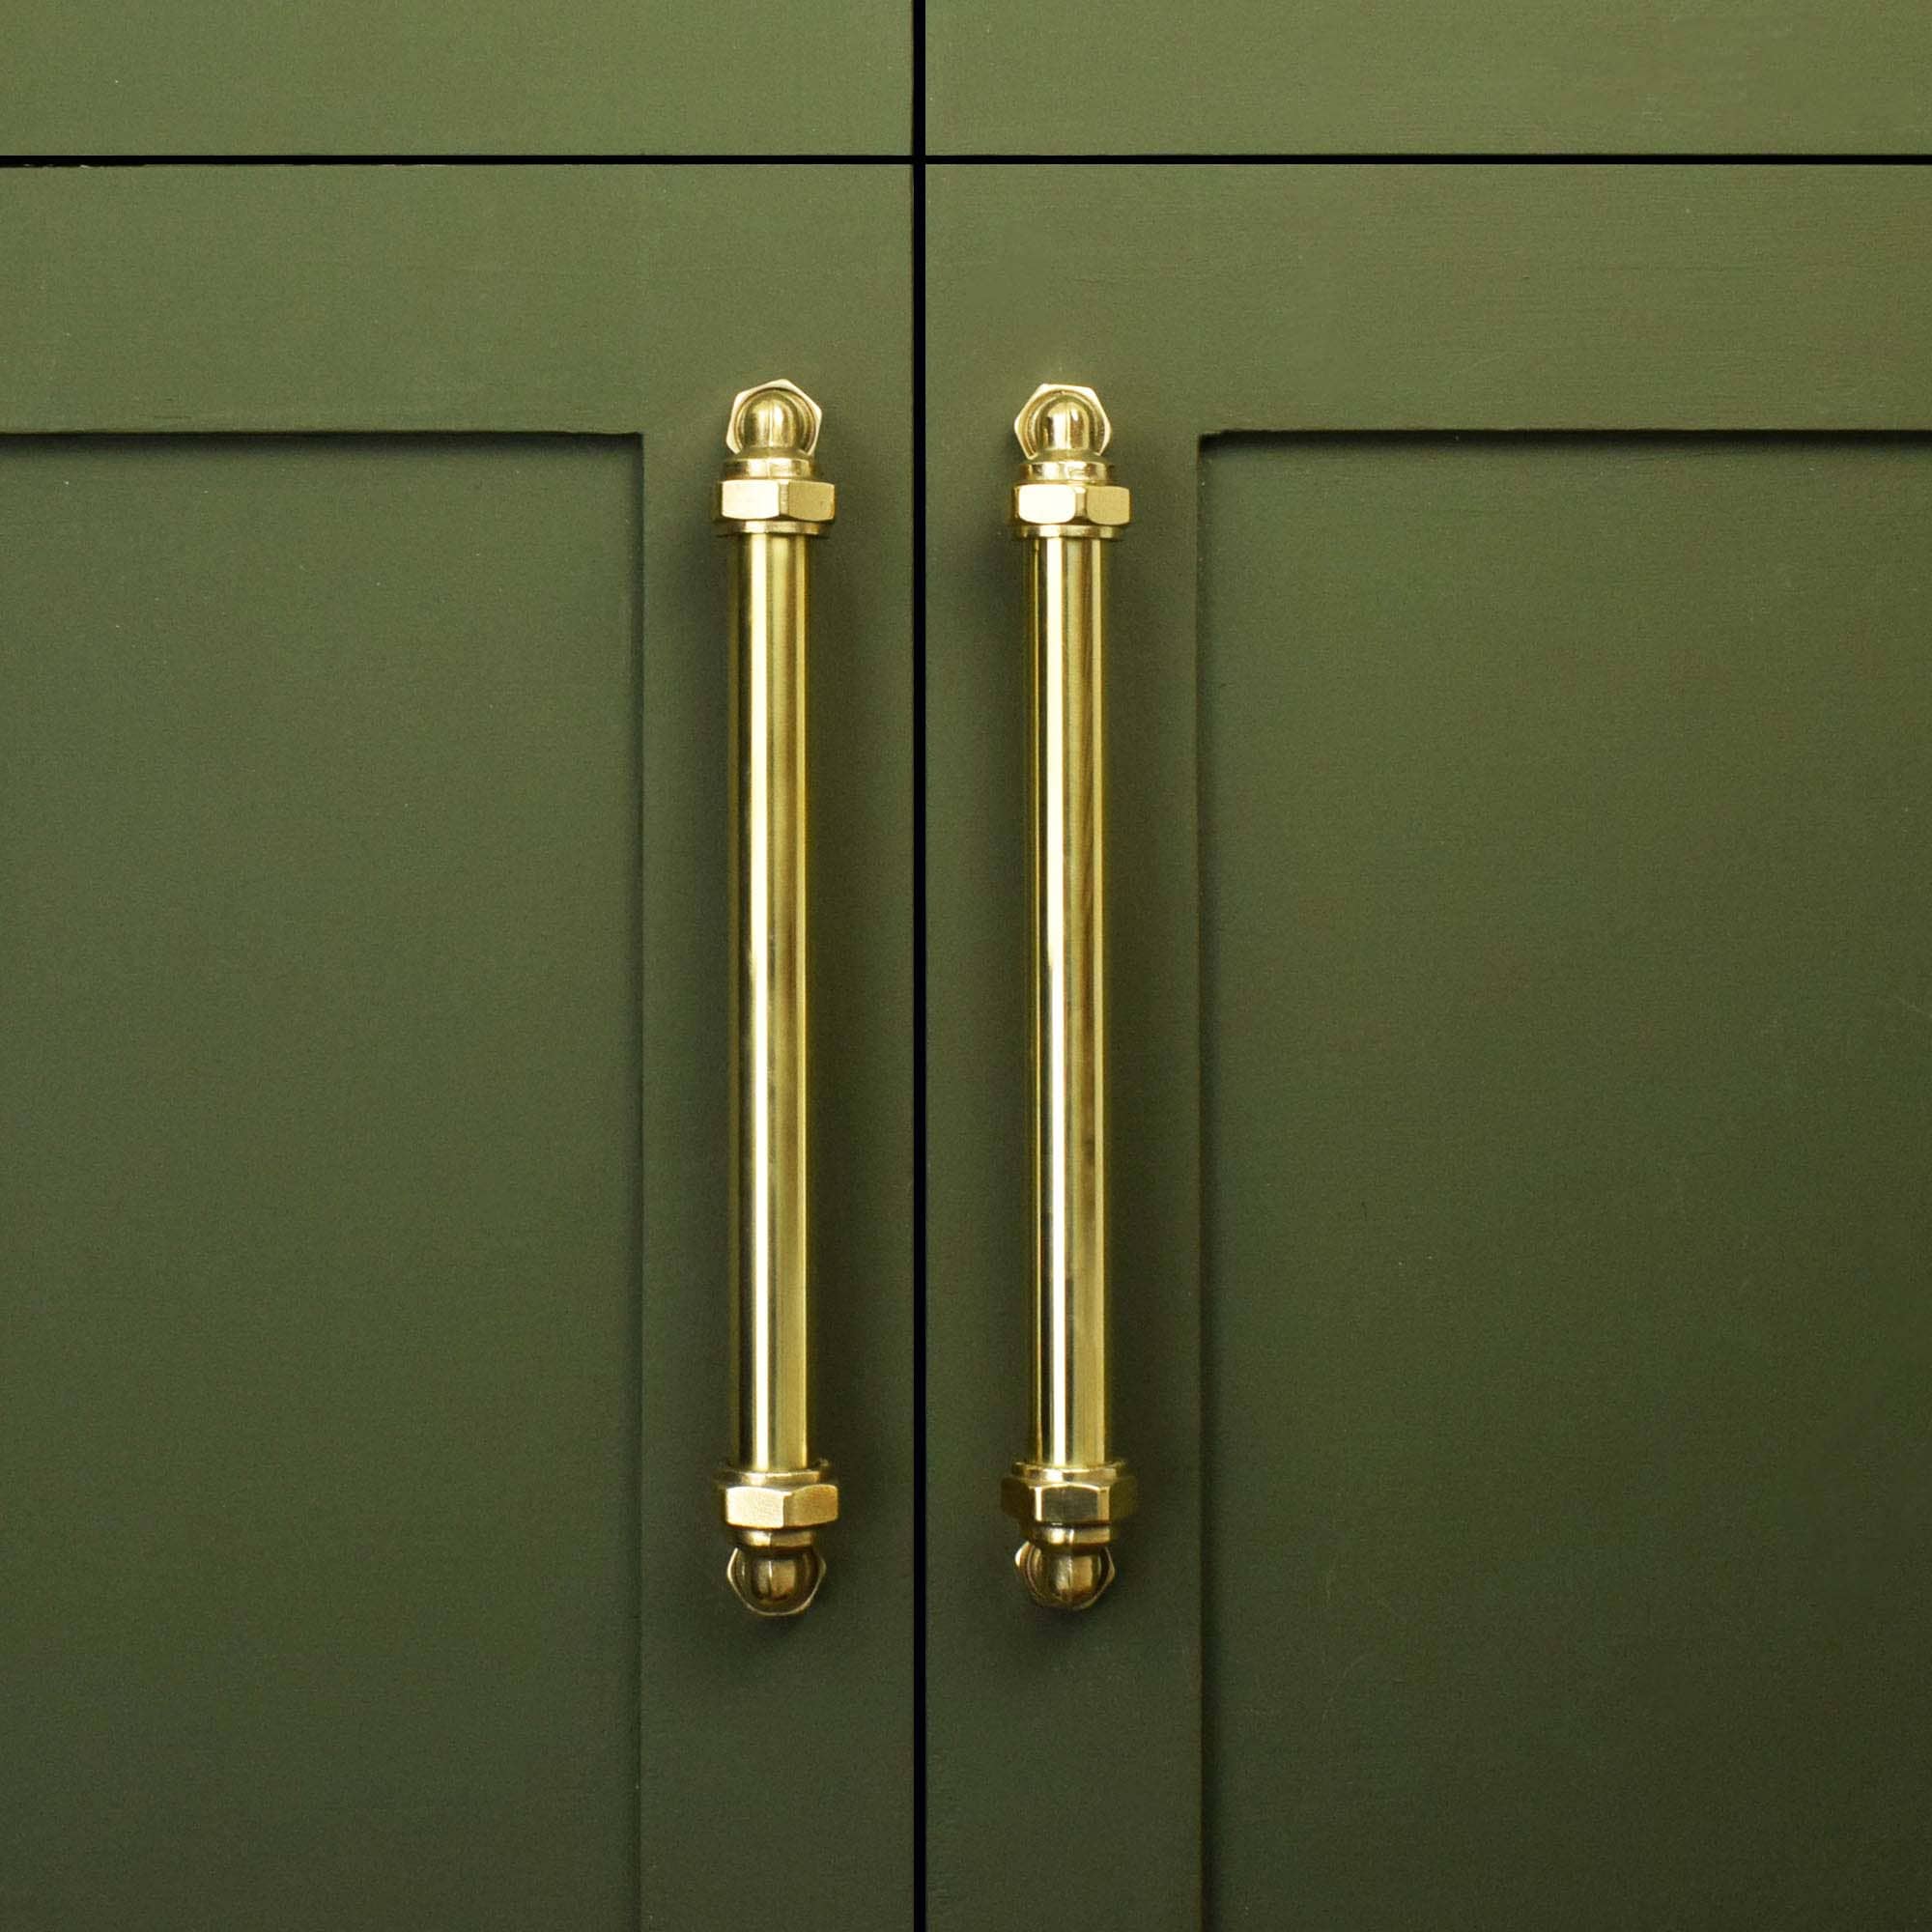 brass pillar pull - handles -luxury brass -  polished door pull- home hardware - brass hardware